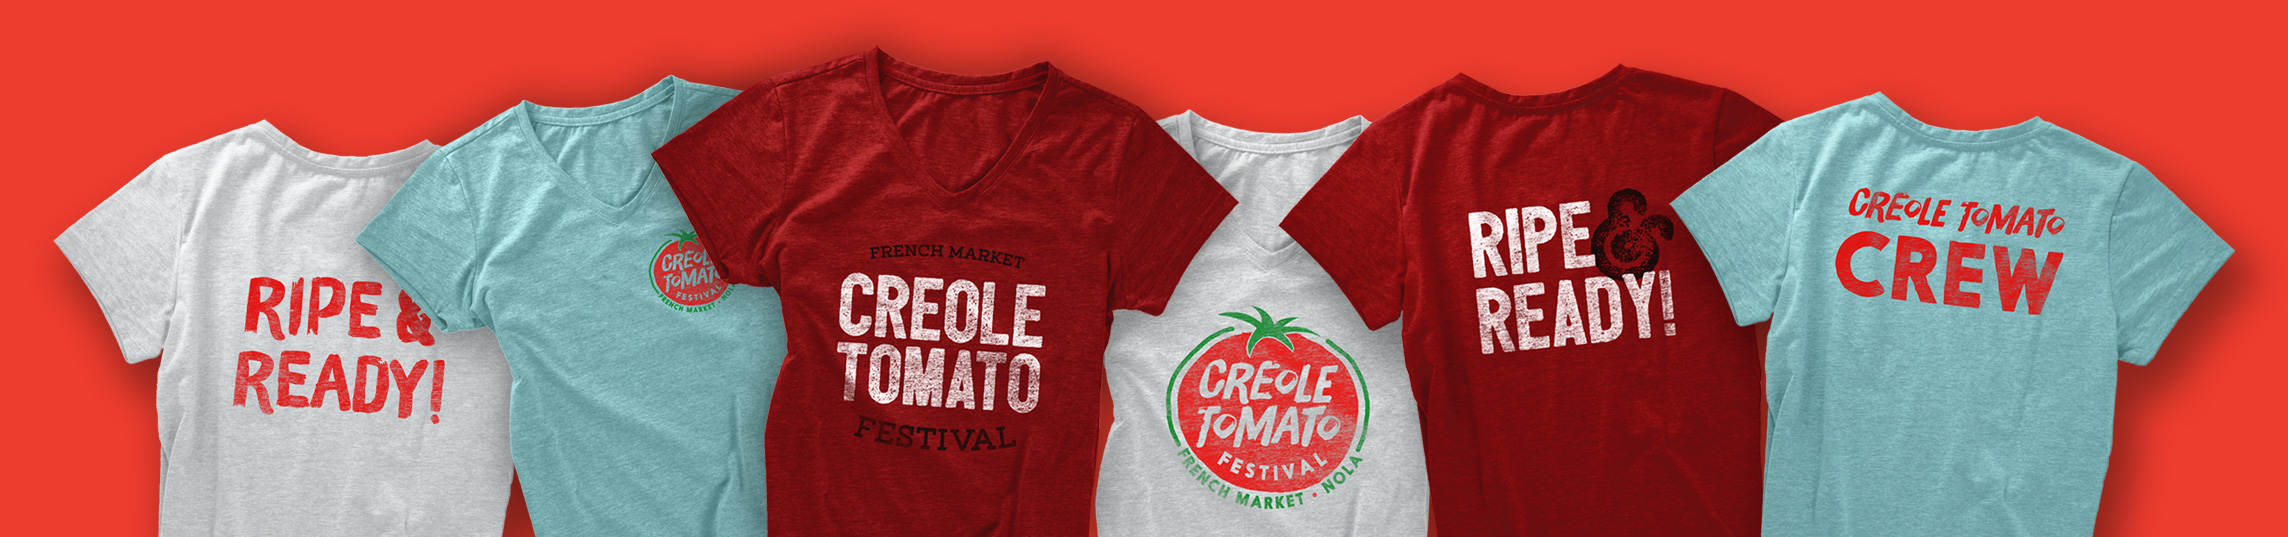 Creole Tomato Festival Tshirts